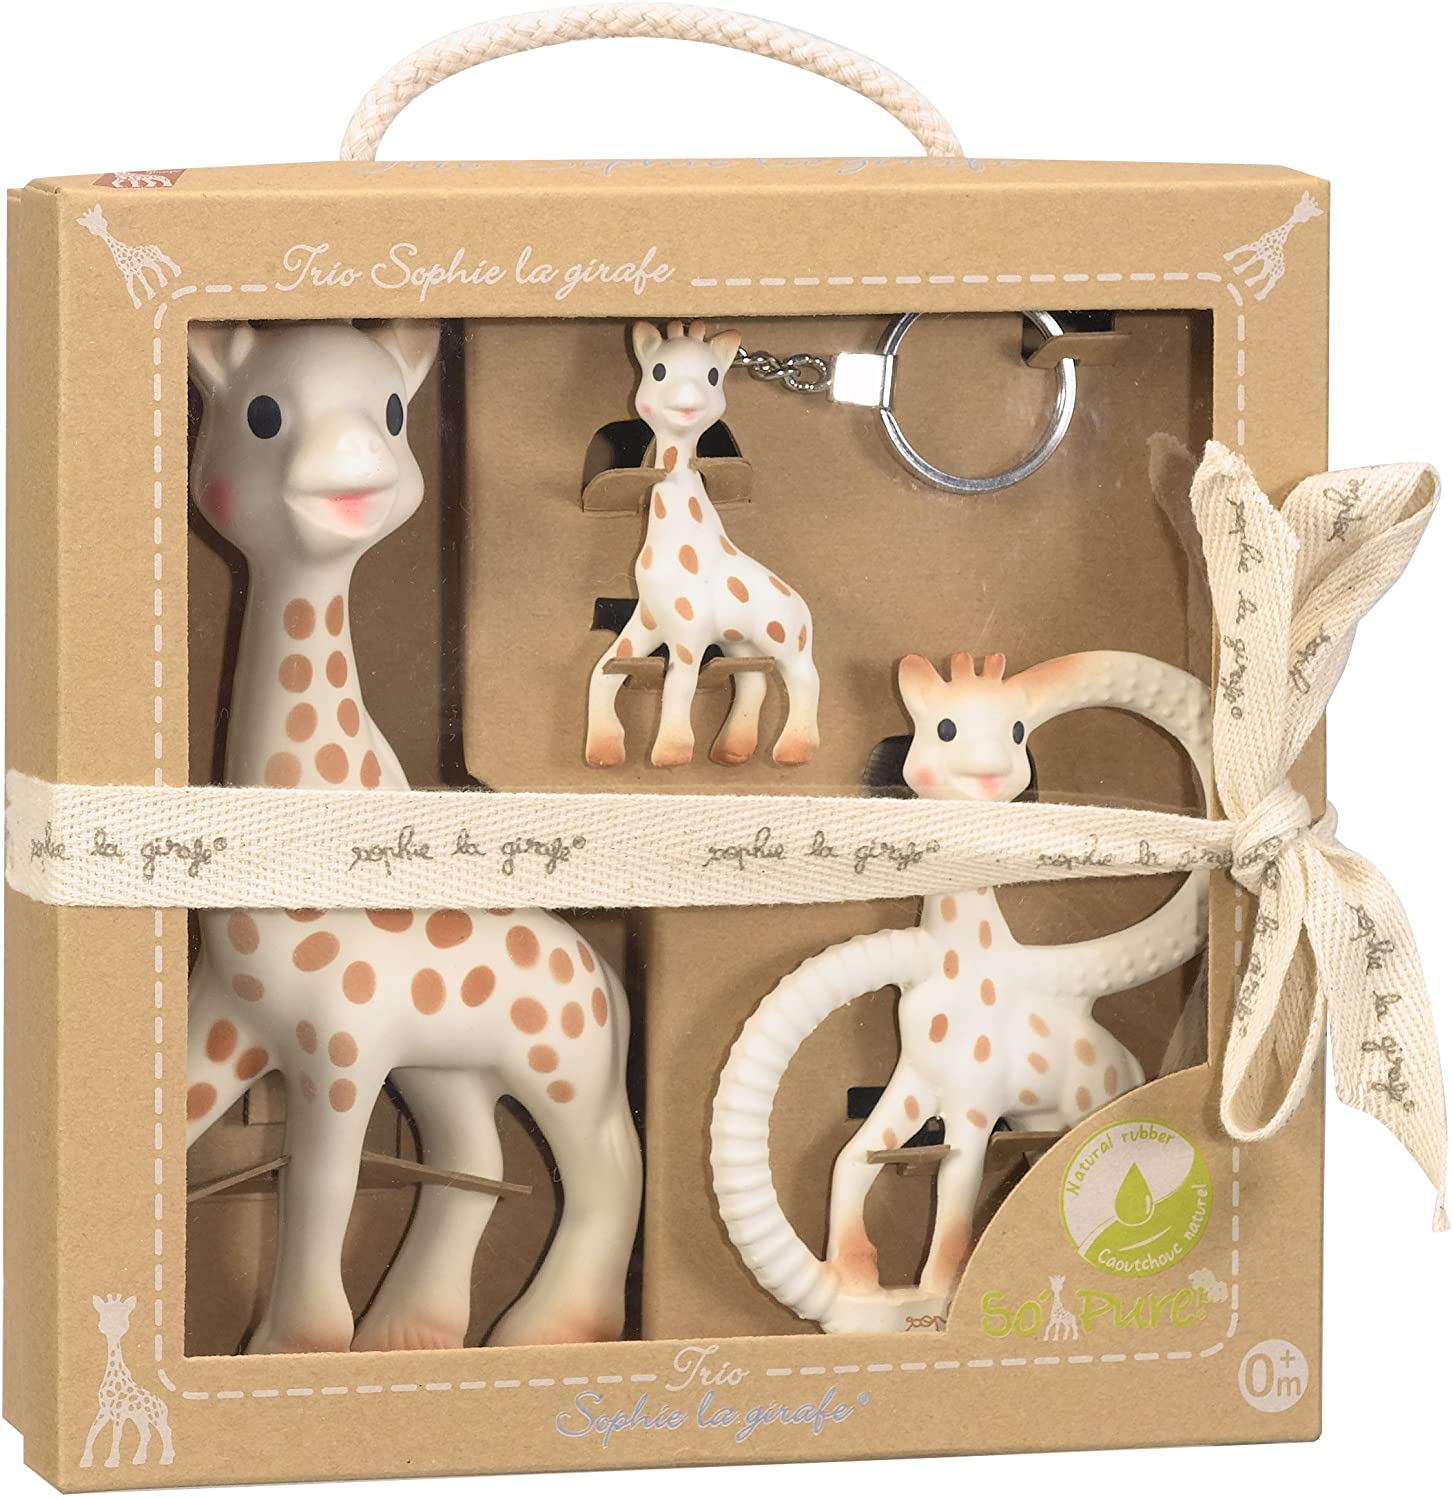 Sophie the giraffe Teether Gift Set - Trio